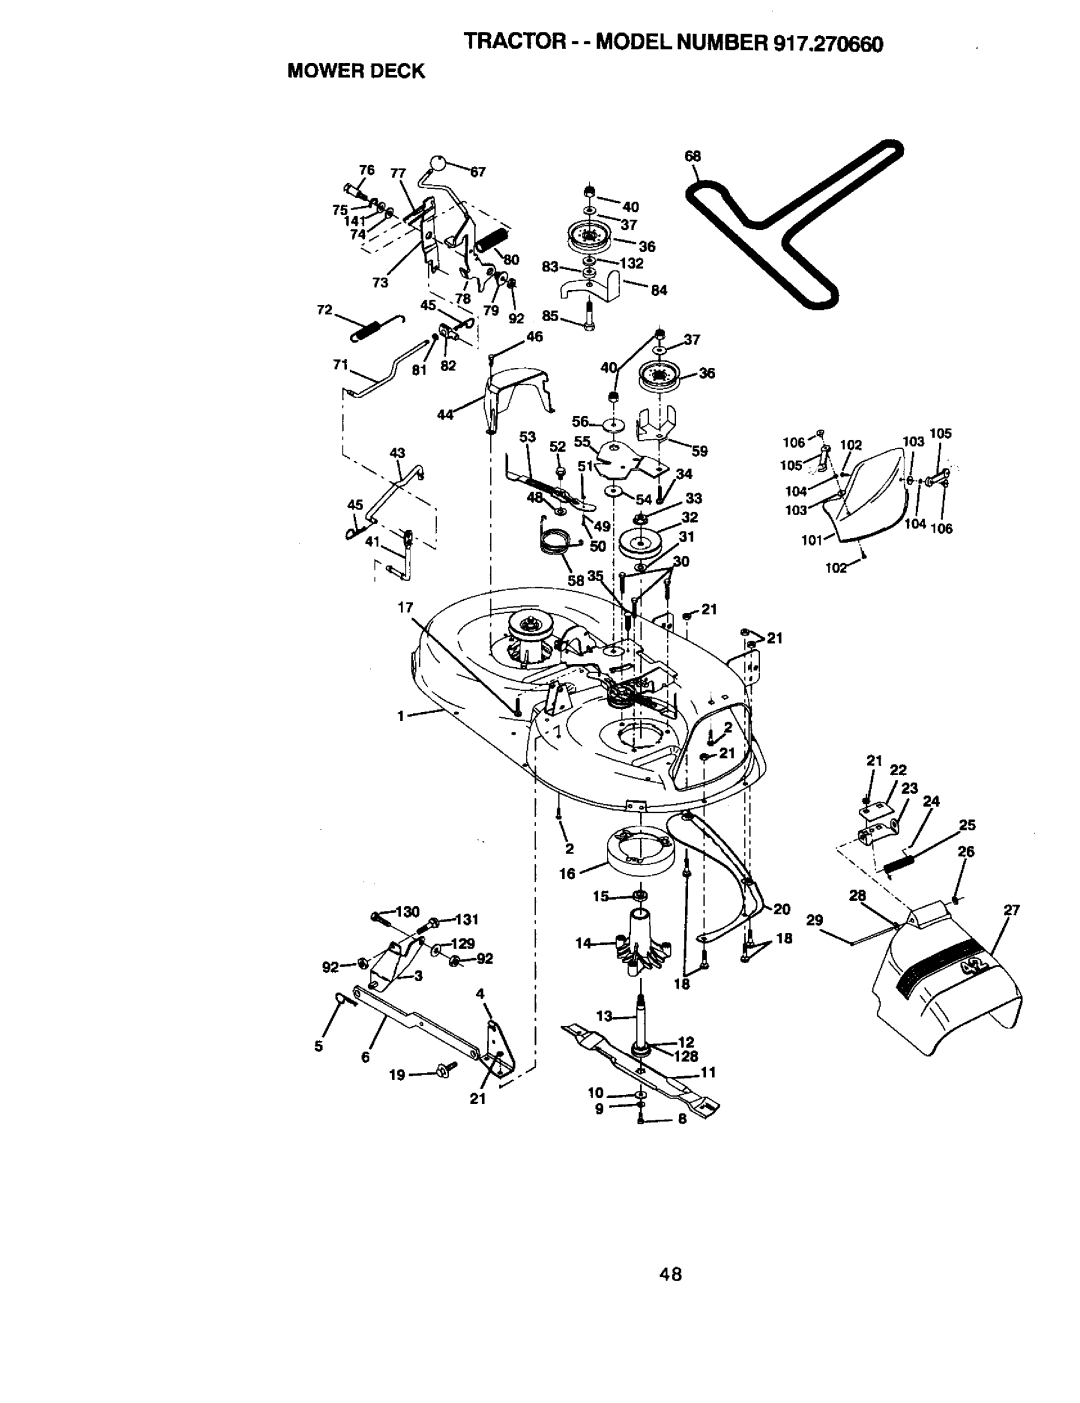 Craftsman 917.27066 owner manual Mower Deck, Lo3- \/i, 14,18 